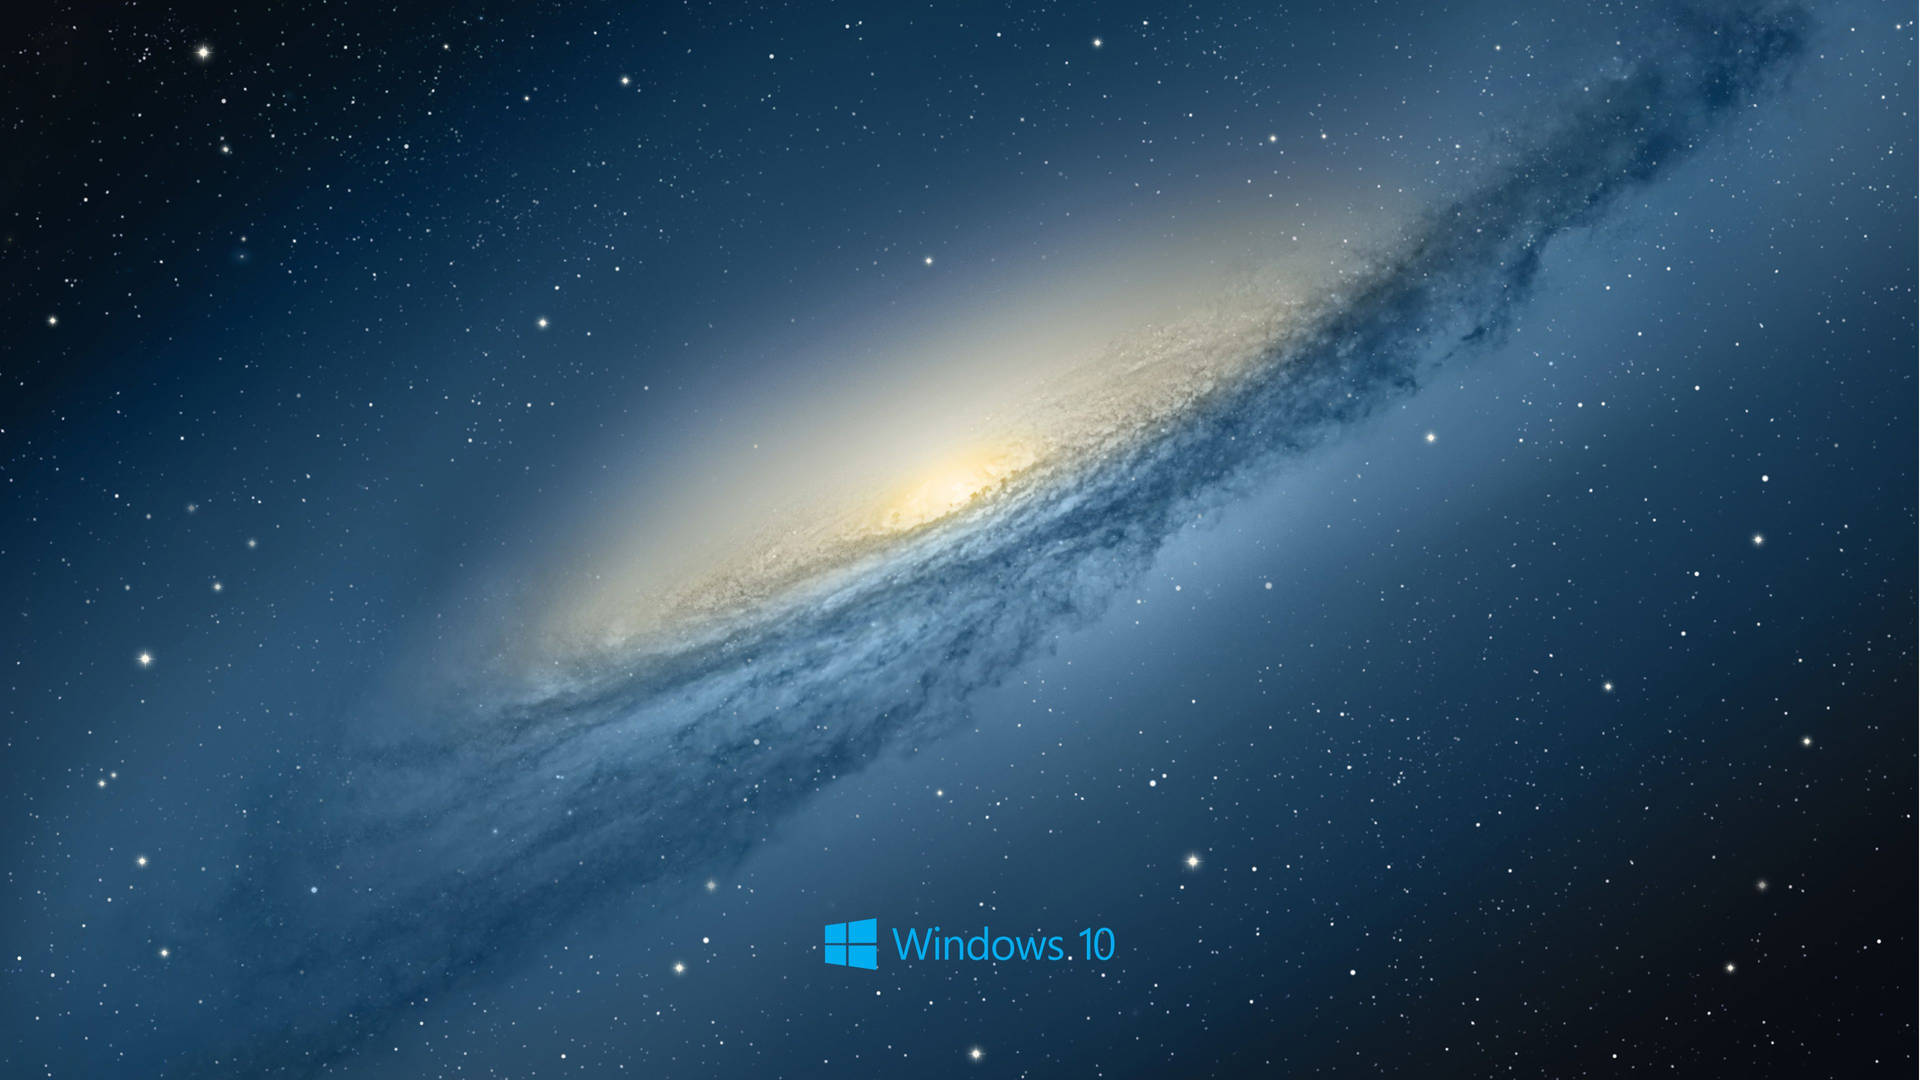 Windows 10 Cosmic Galaxy Background